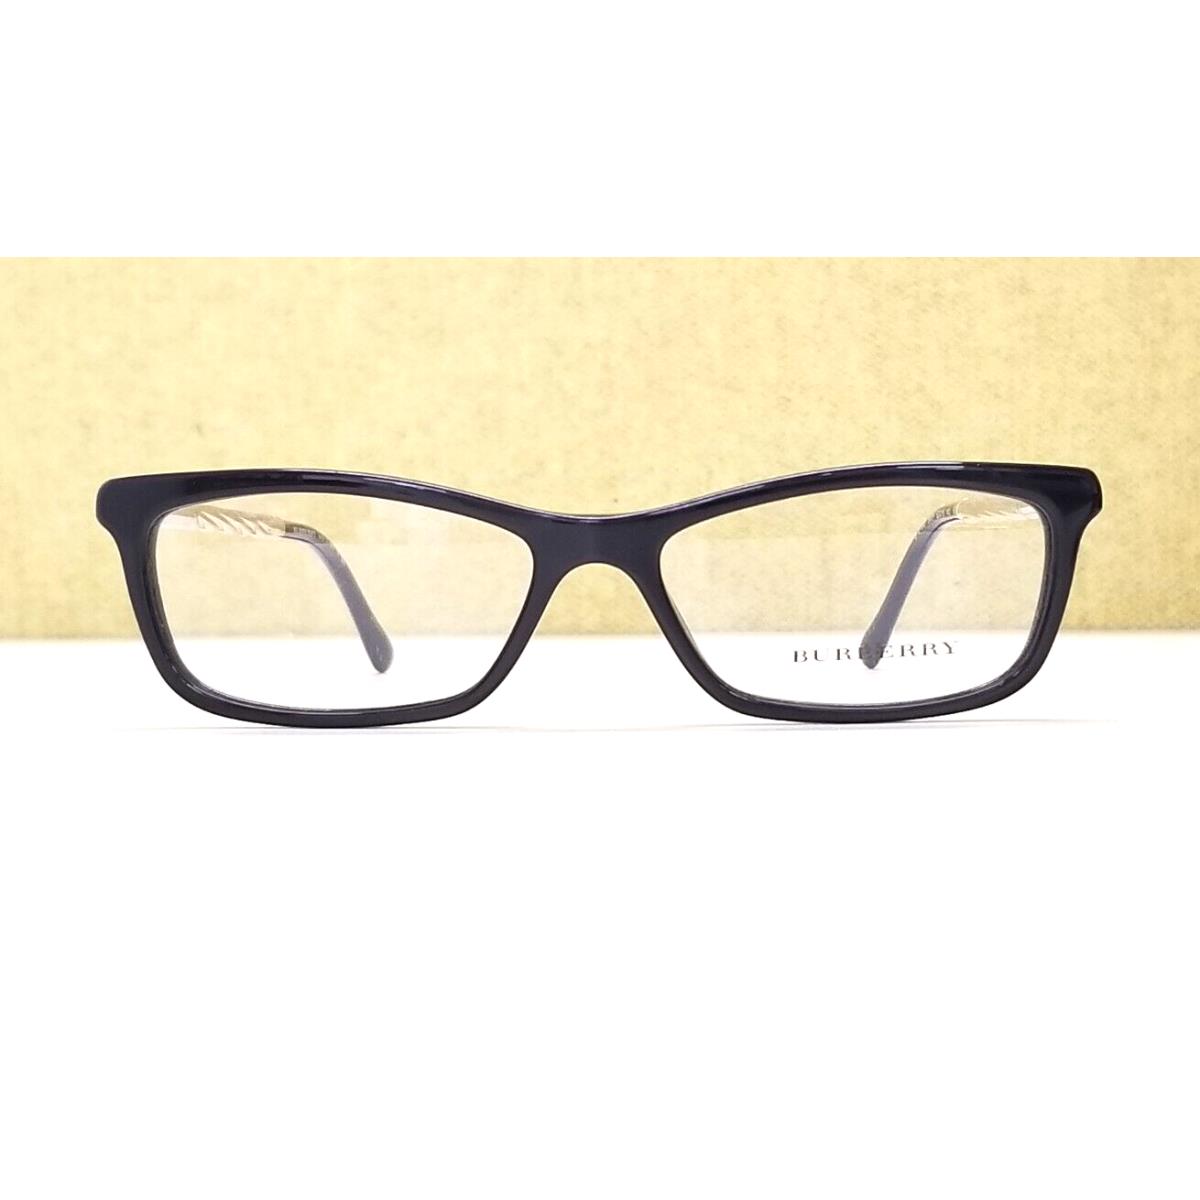 Burberry eyeglasses  - Black, Soft gold accent Frame 0